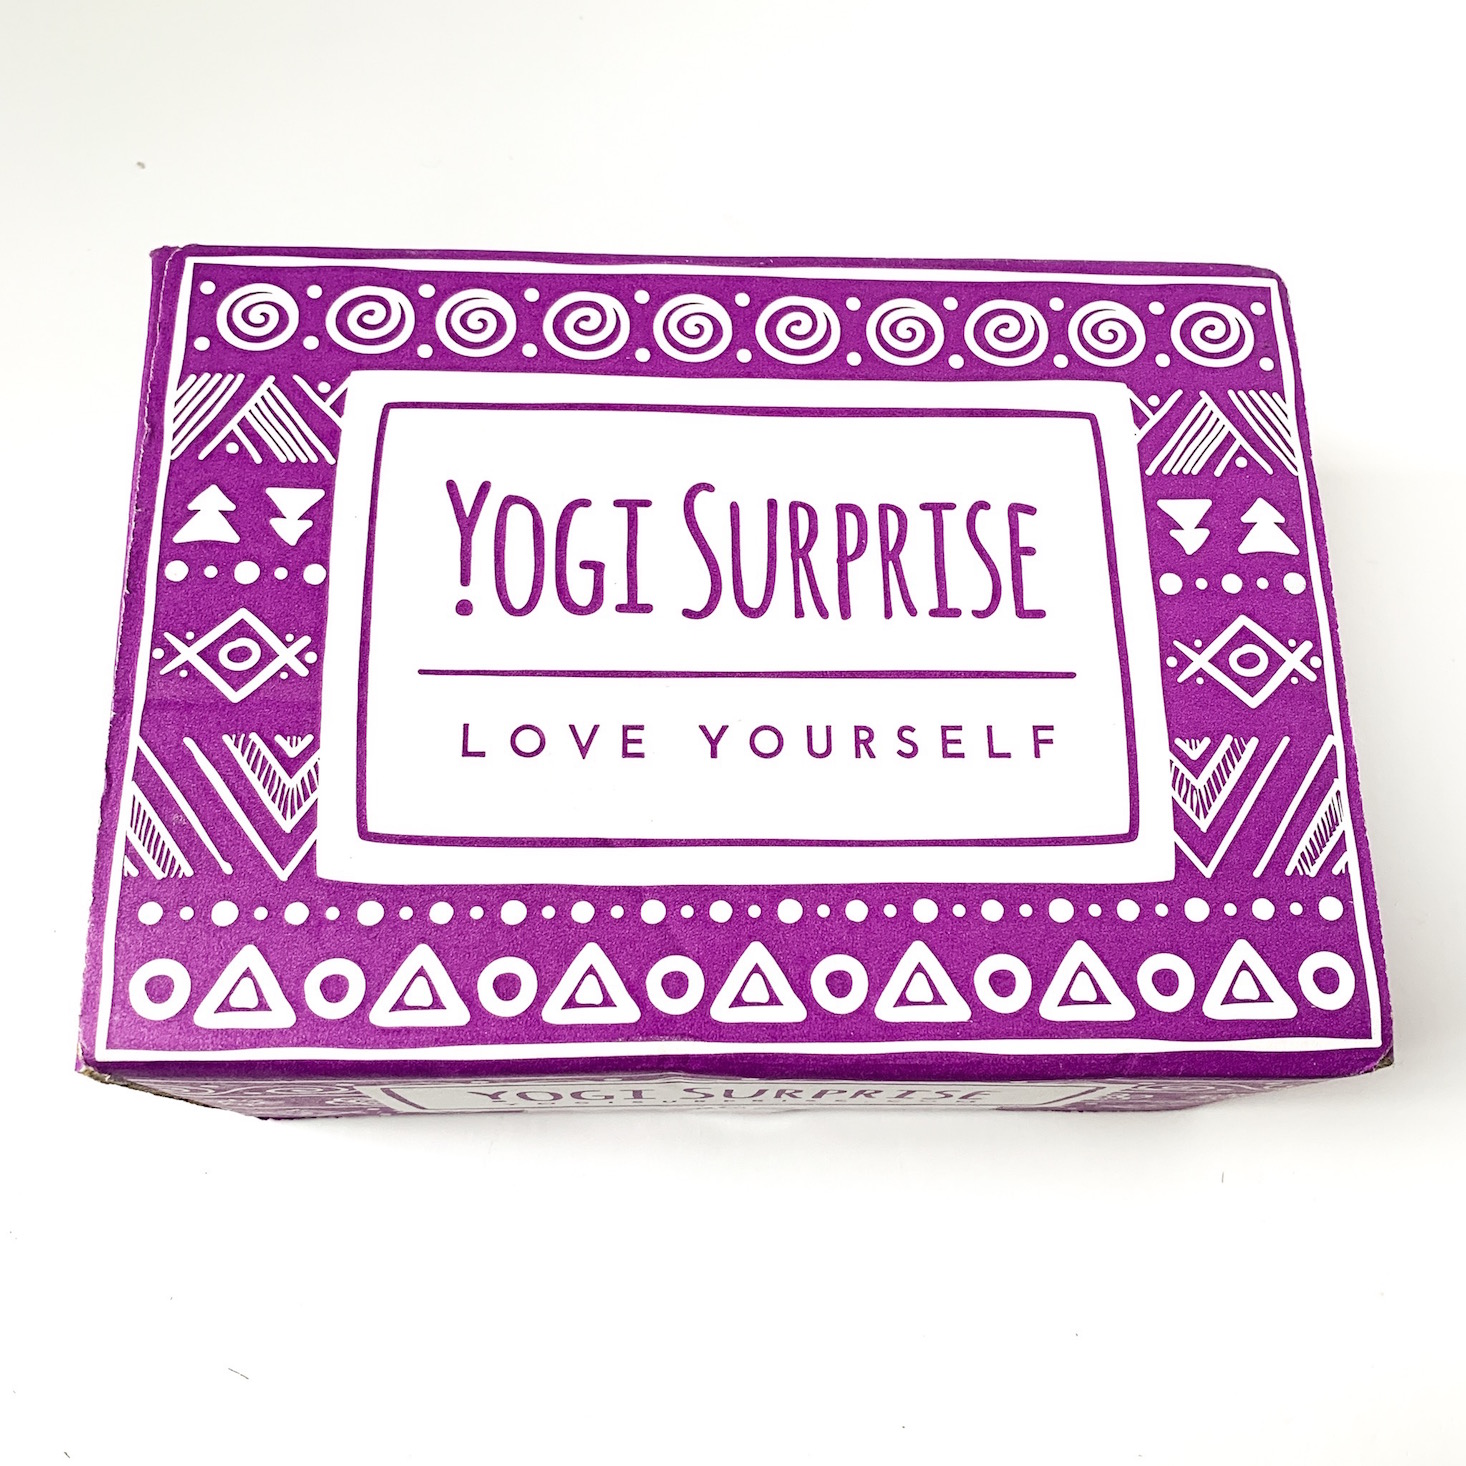 Yogi Surprise Subscription Box Review + Coupon – February 2019